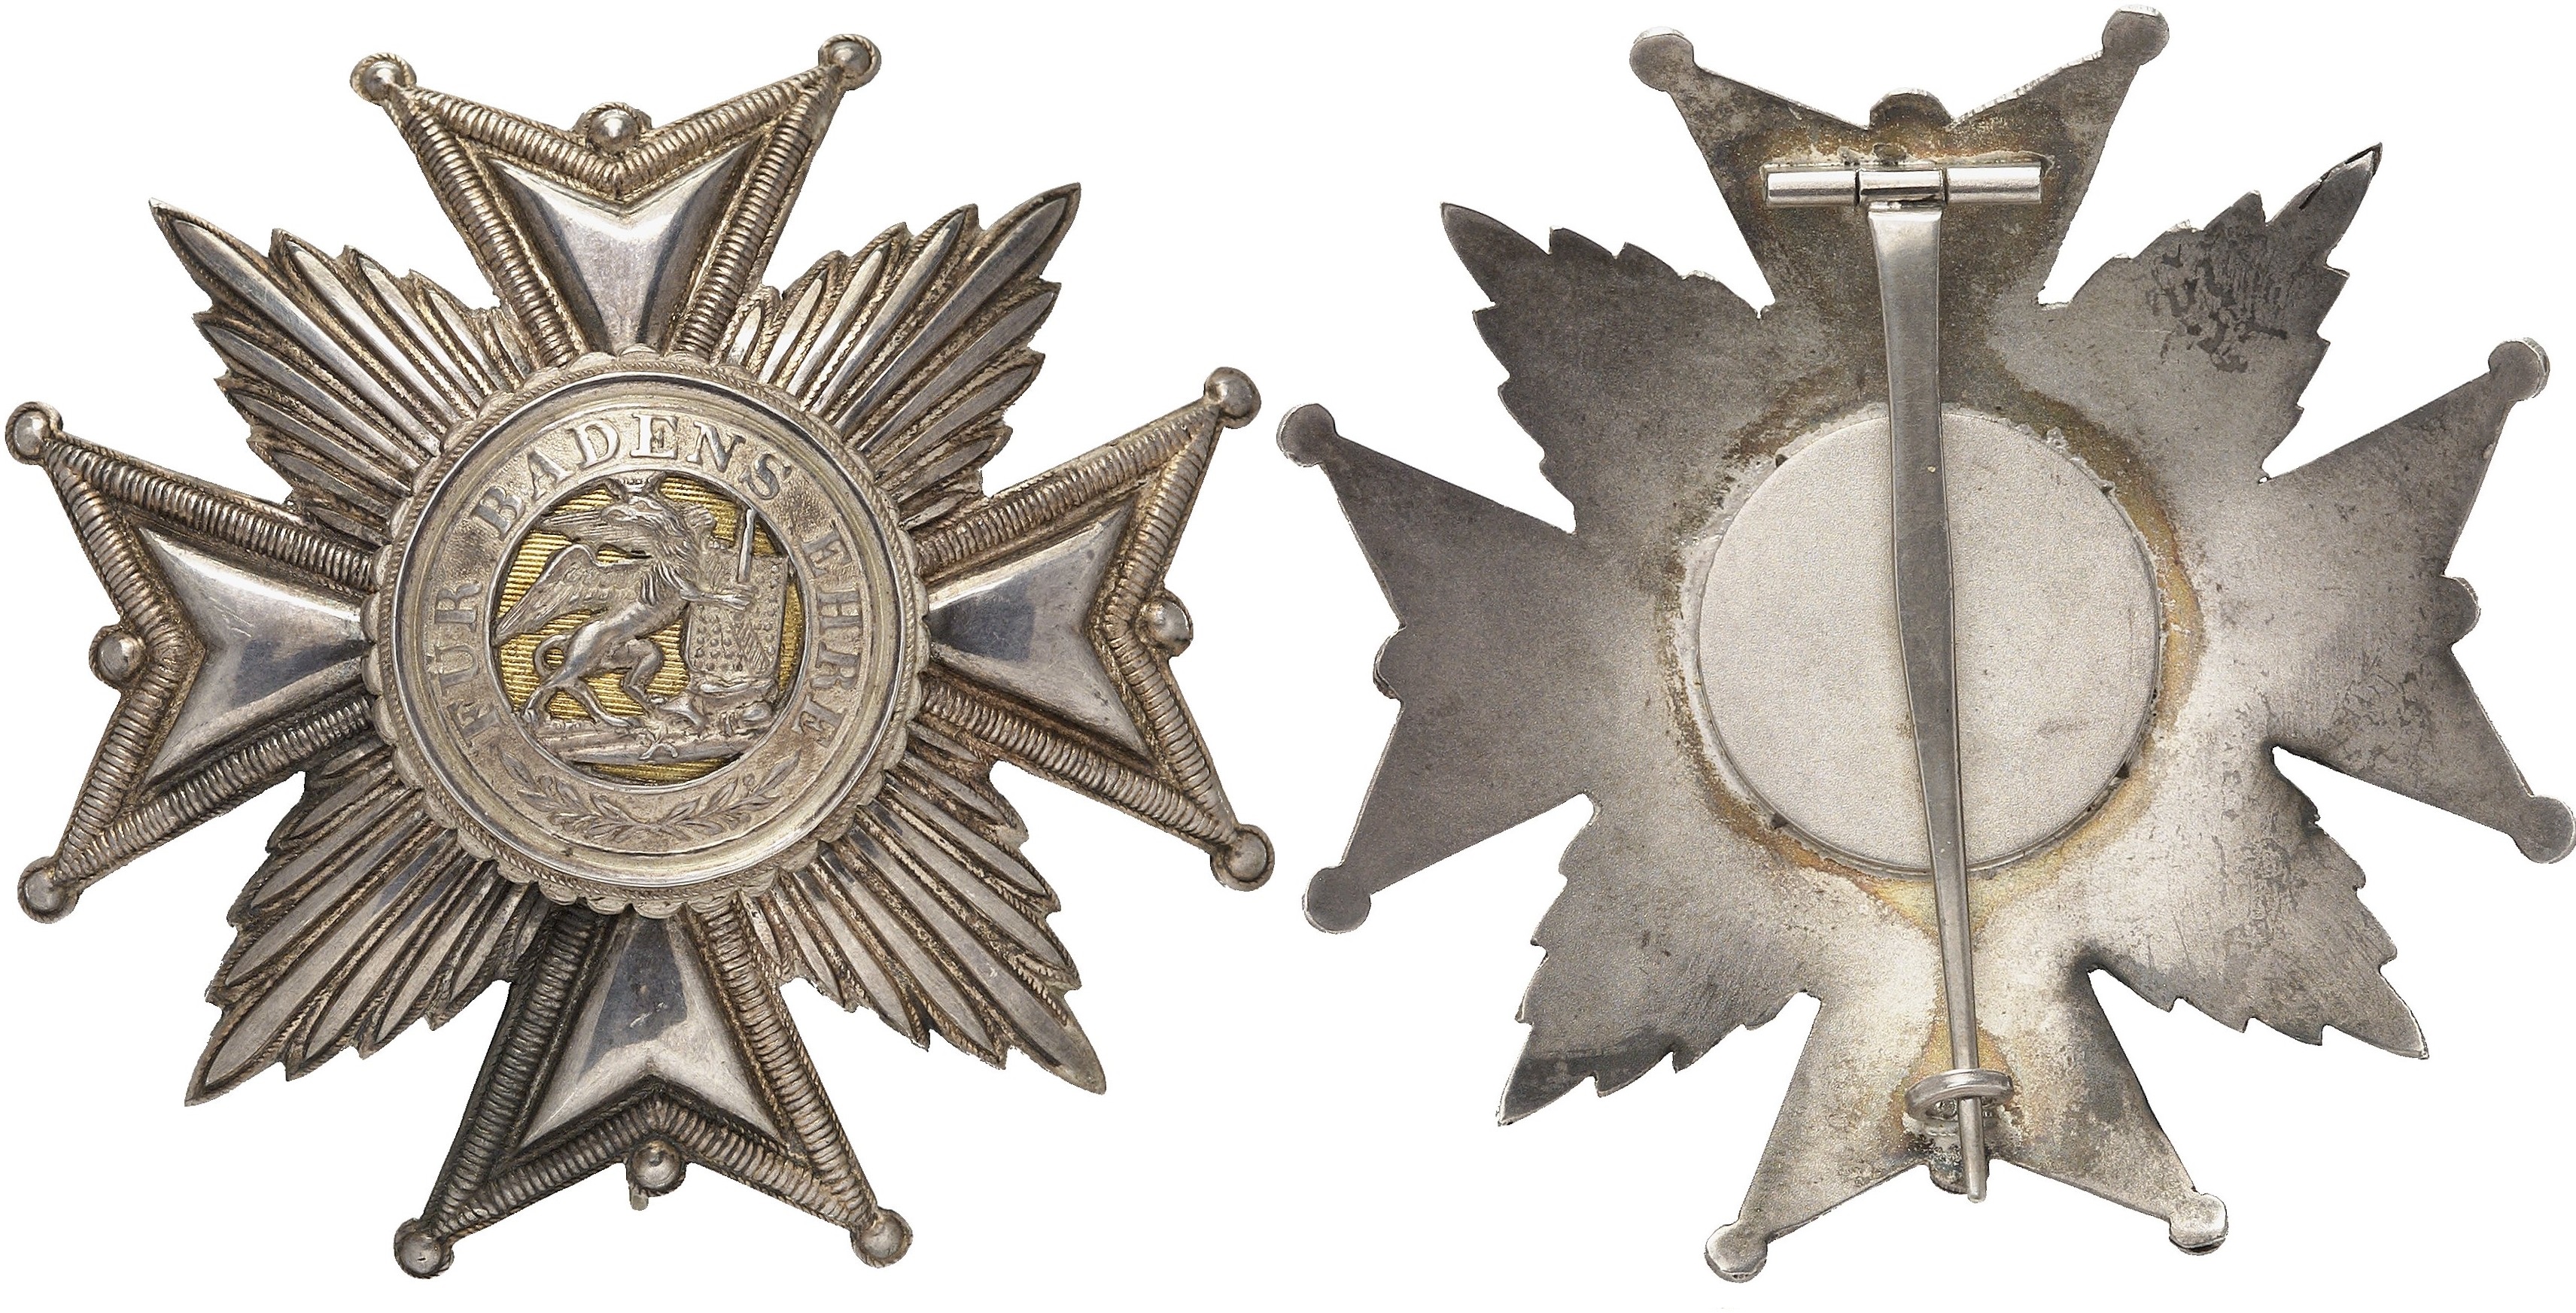 Orden 55mm breit fertig genäht Ordensband Baden Militär Karl Friedrich Verd